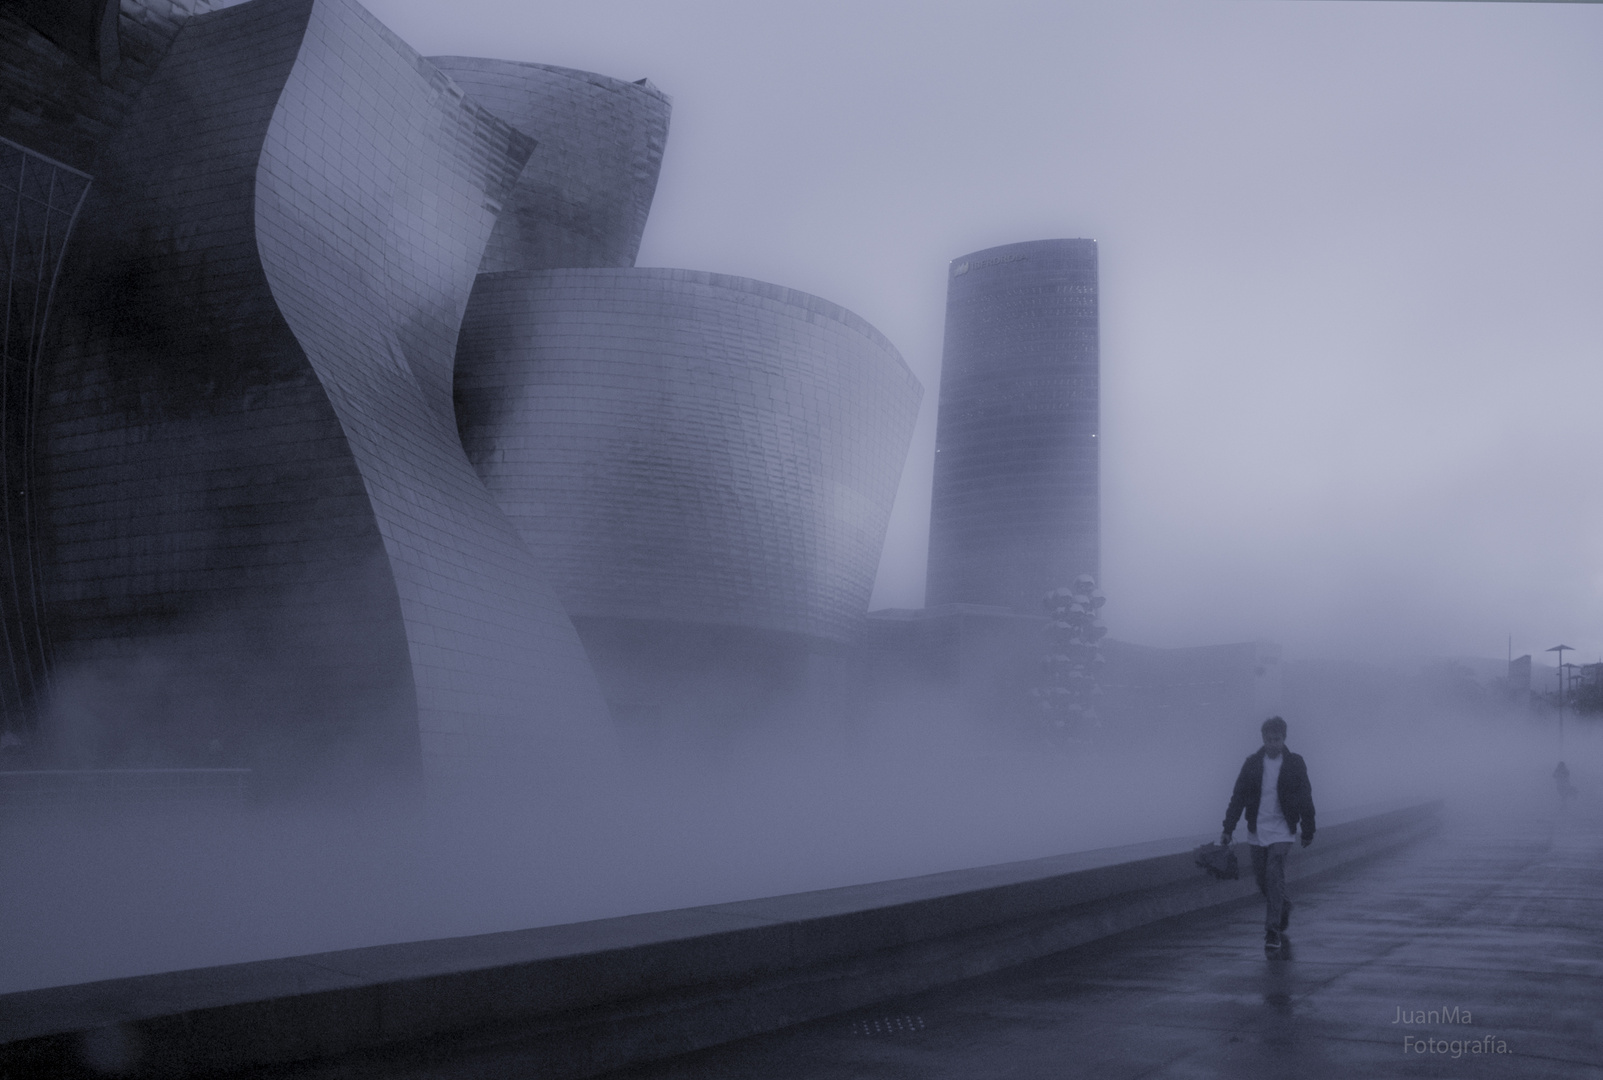 Guggenheim ( Bilbao ).